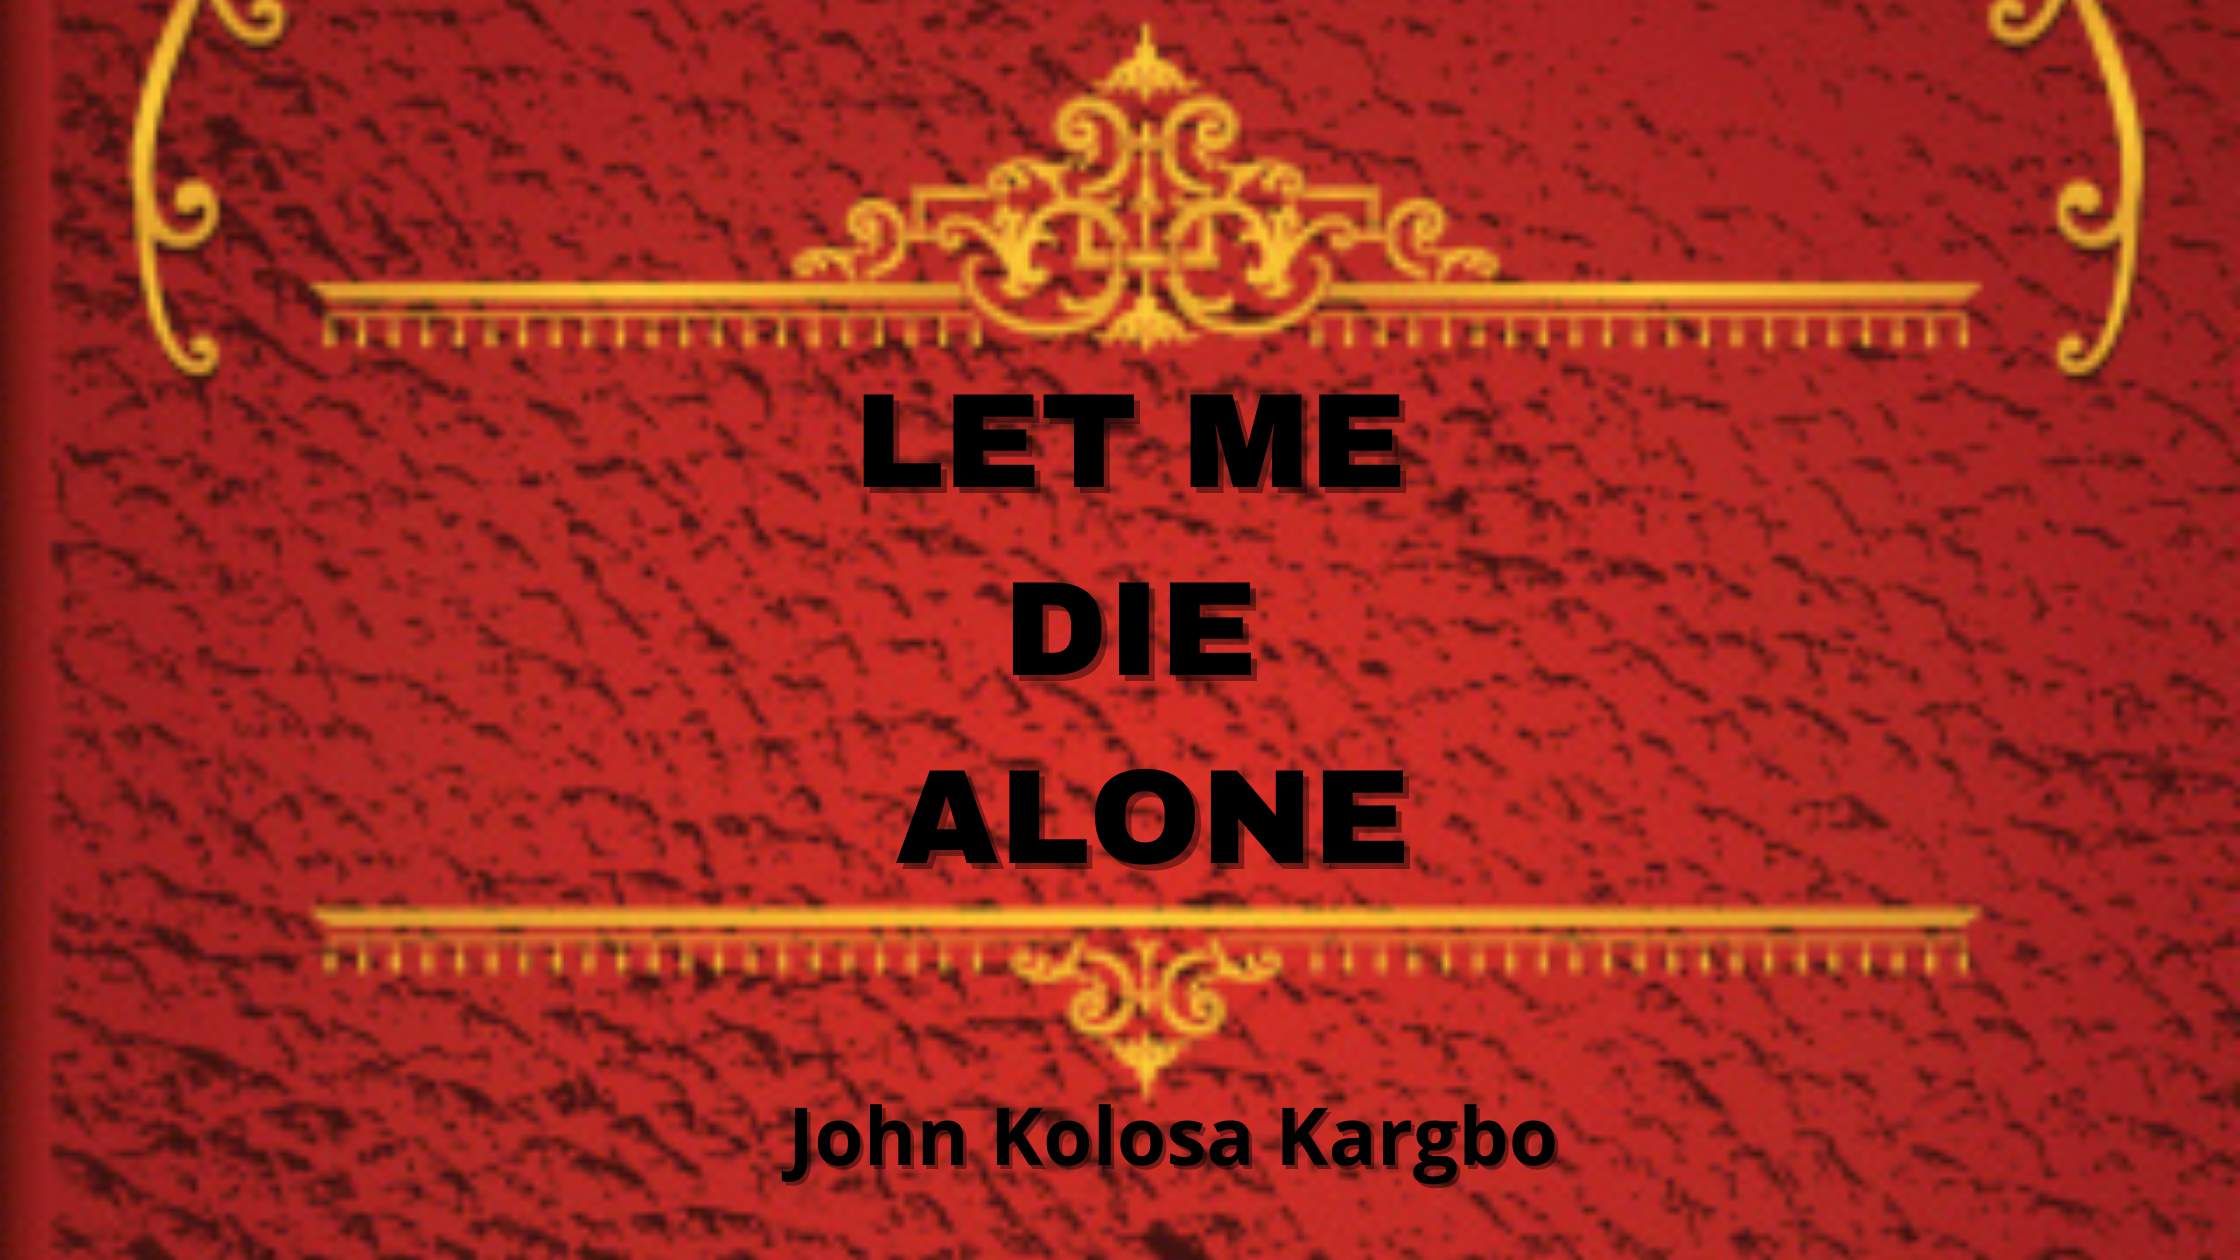 Plot Summary Of Let Me Die Alone by John Kolosa Kargbo